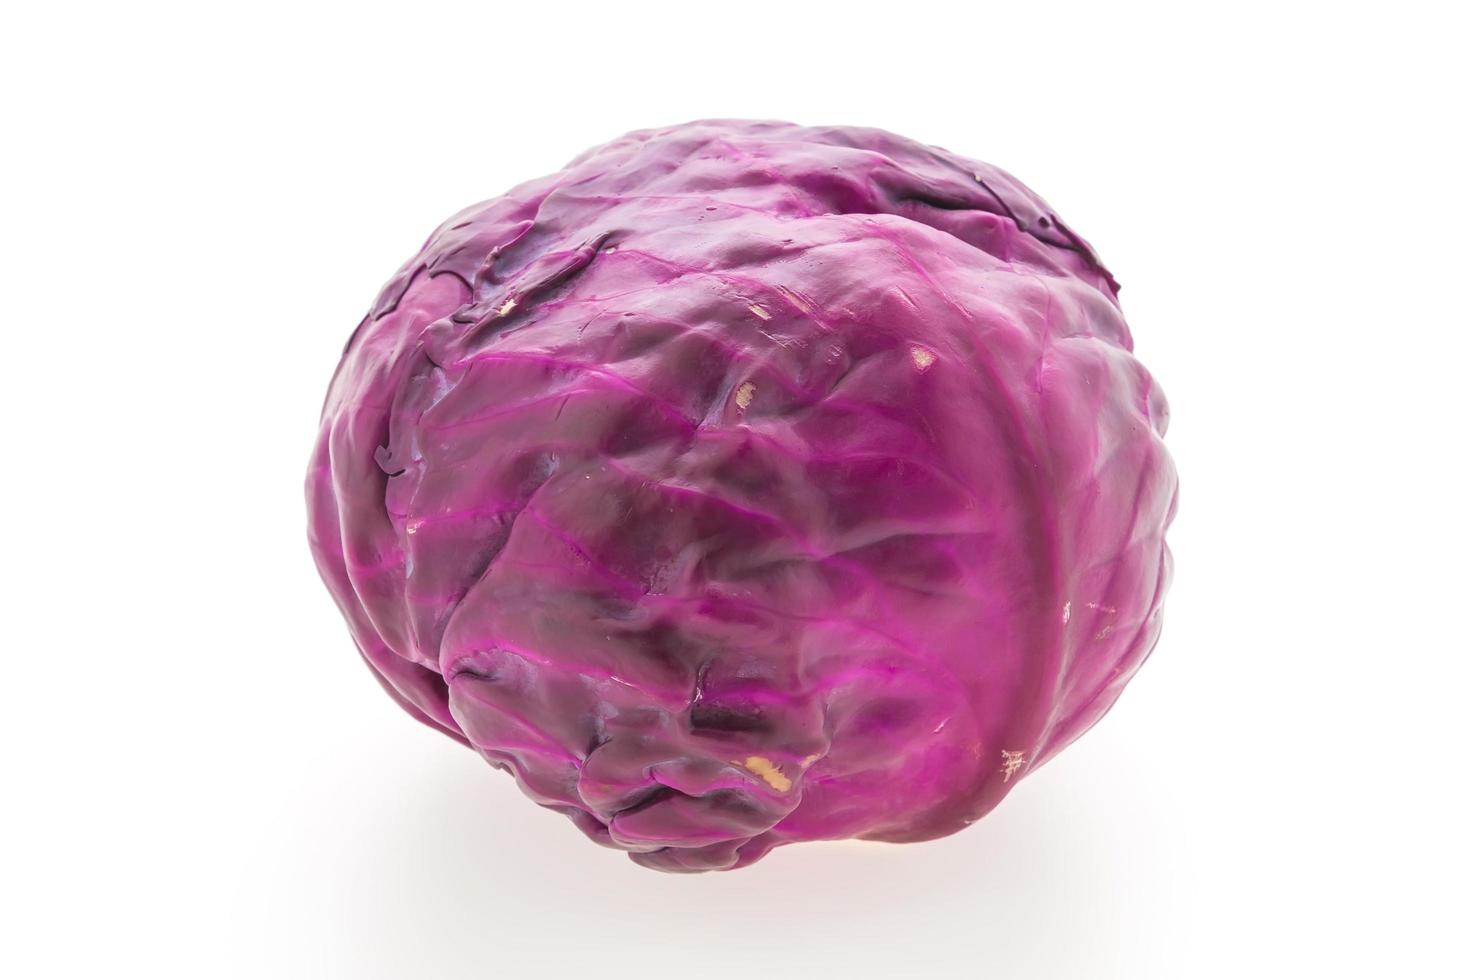 Purple cabbage on white background photo